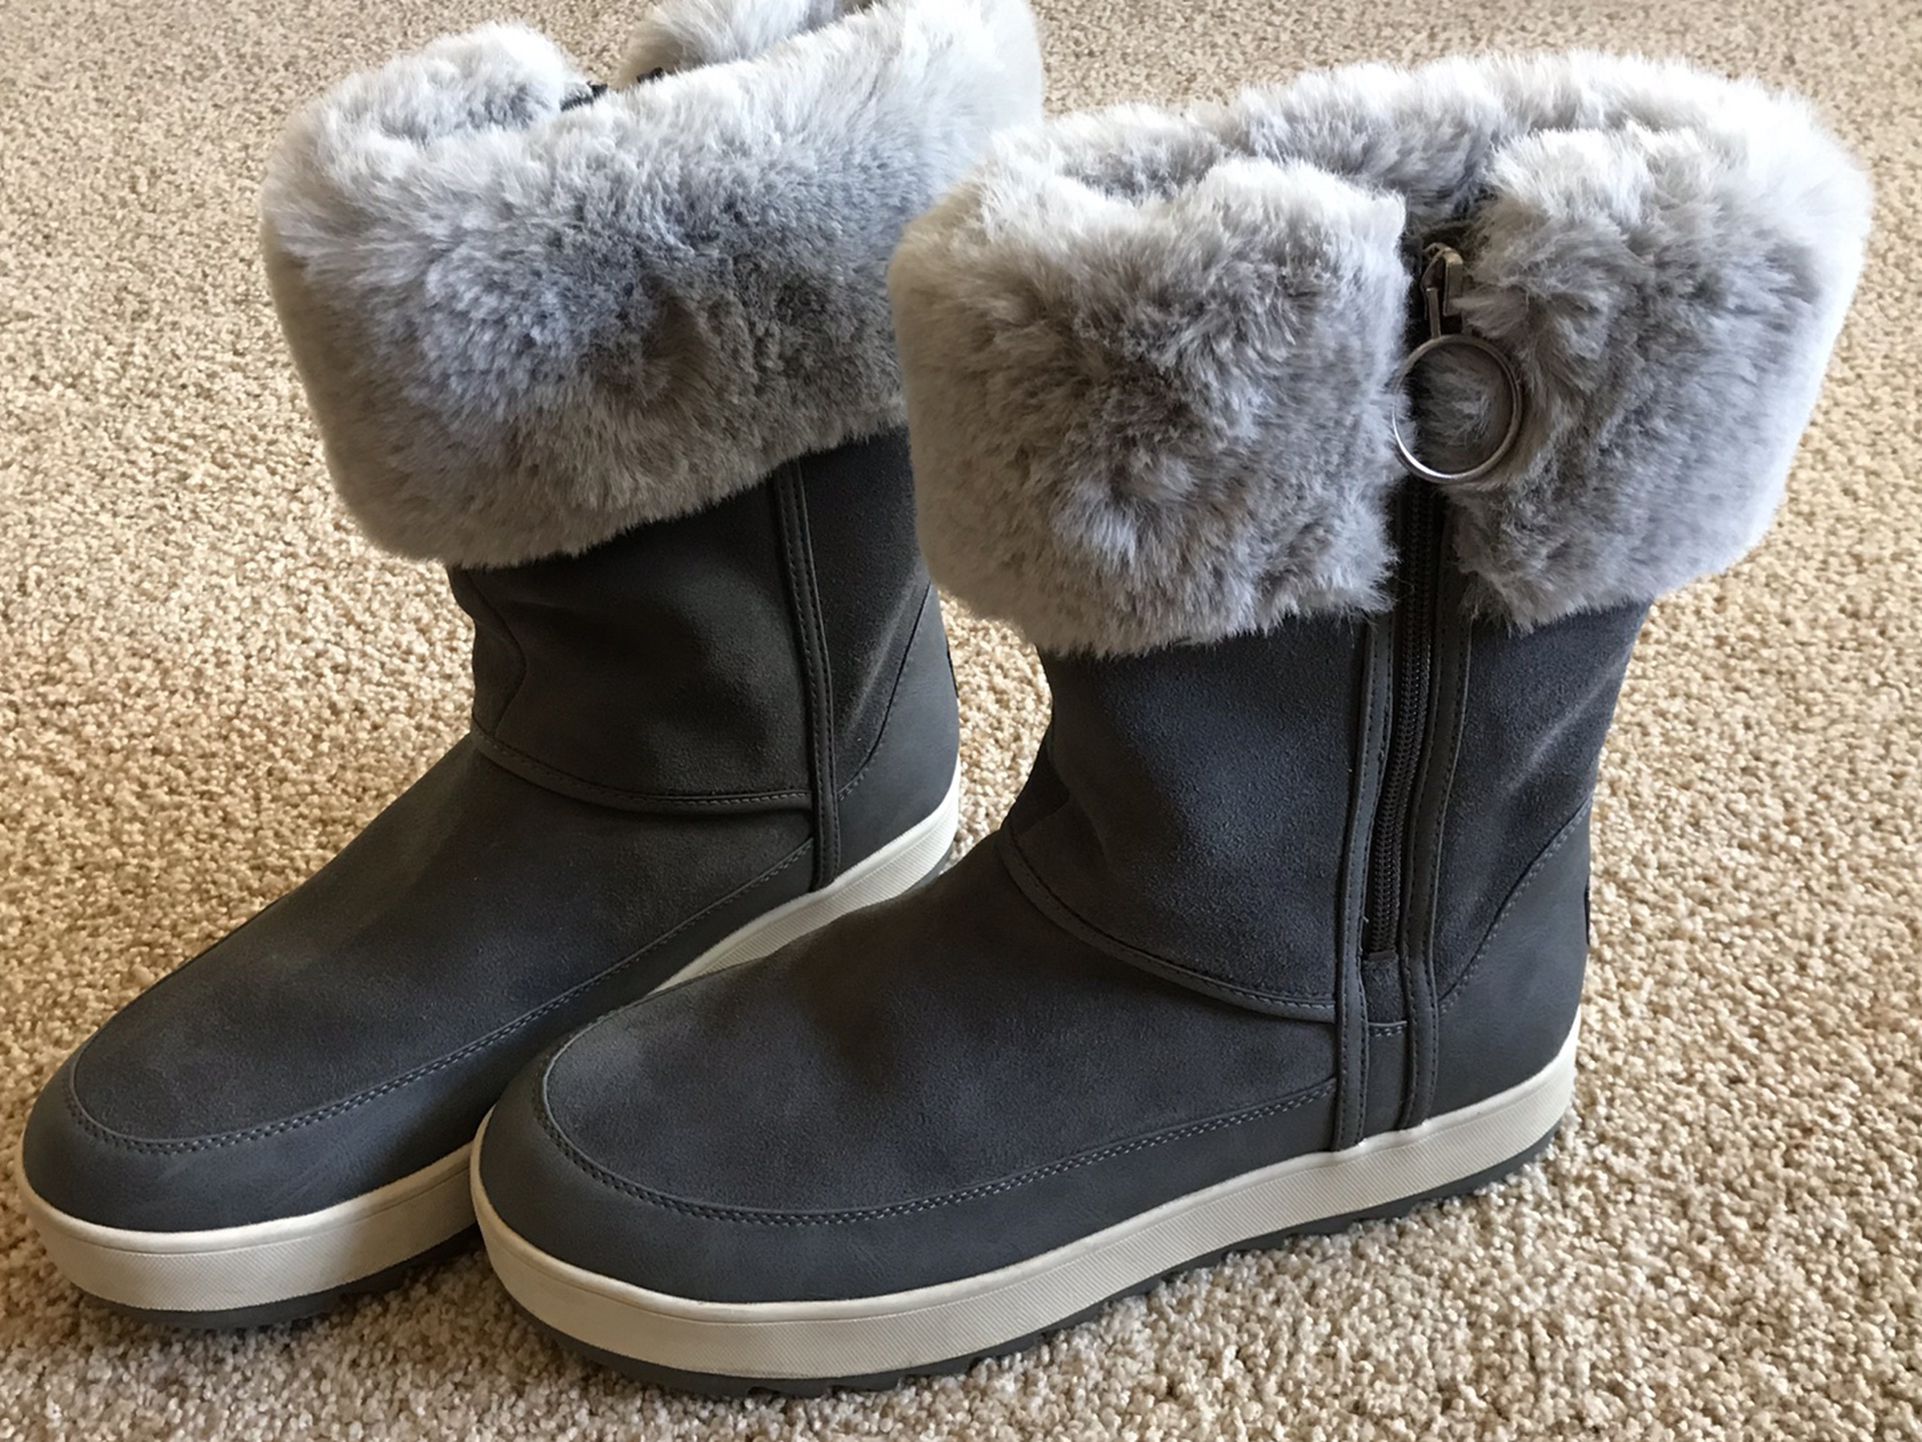 Women’s Fur Boots, Size 10, Ugg 